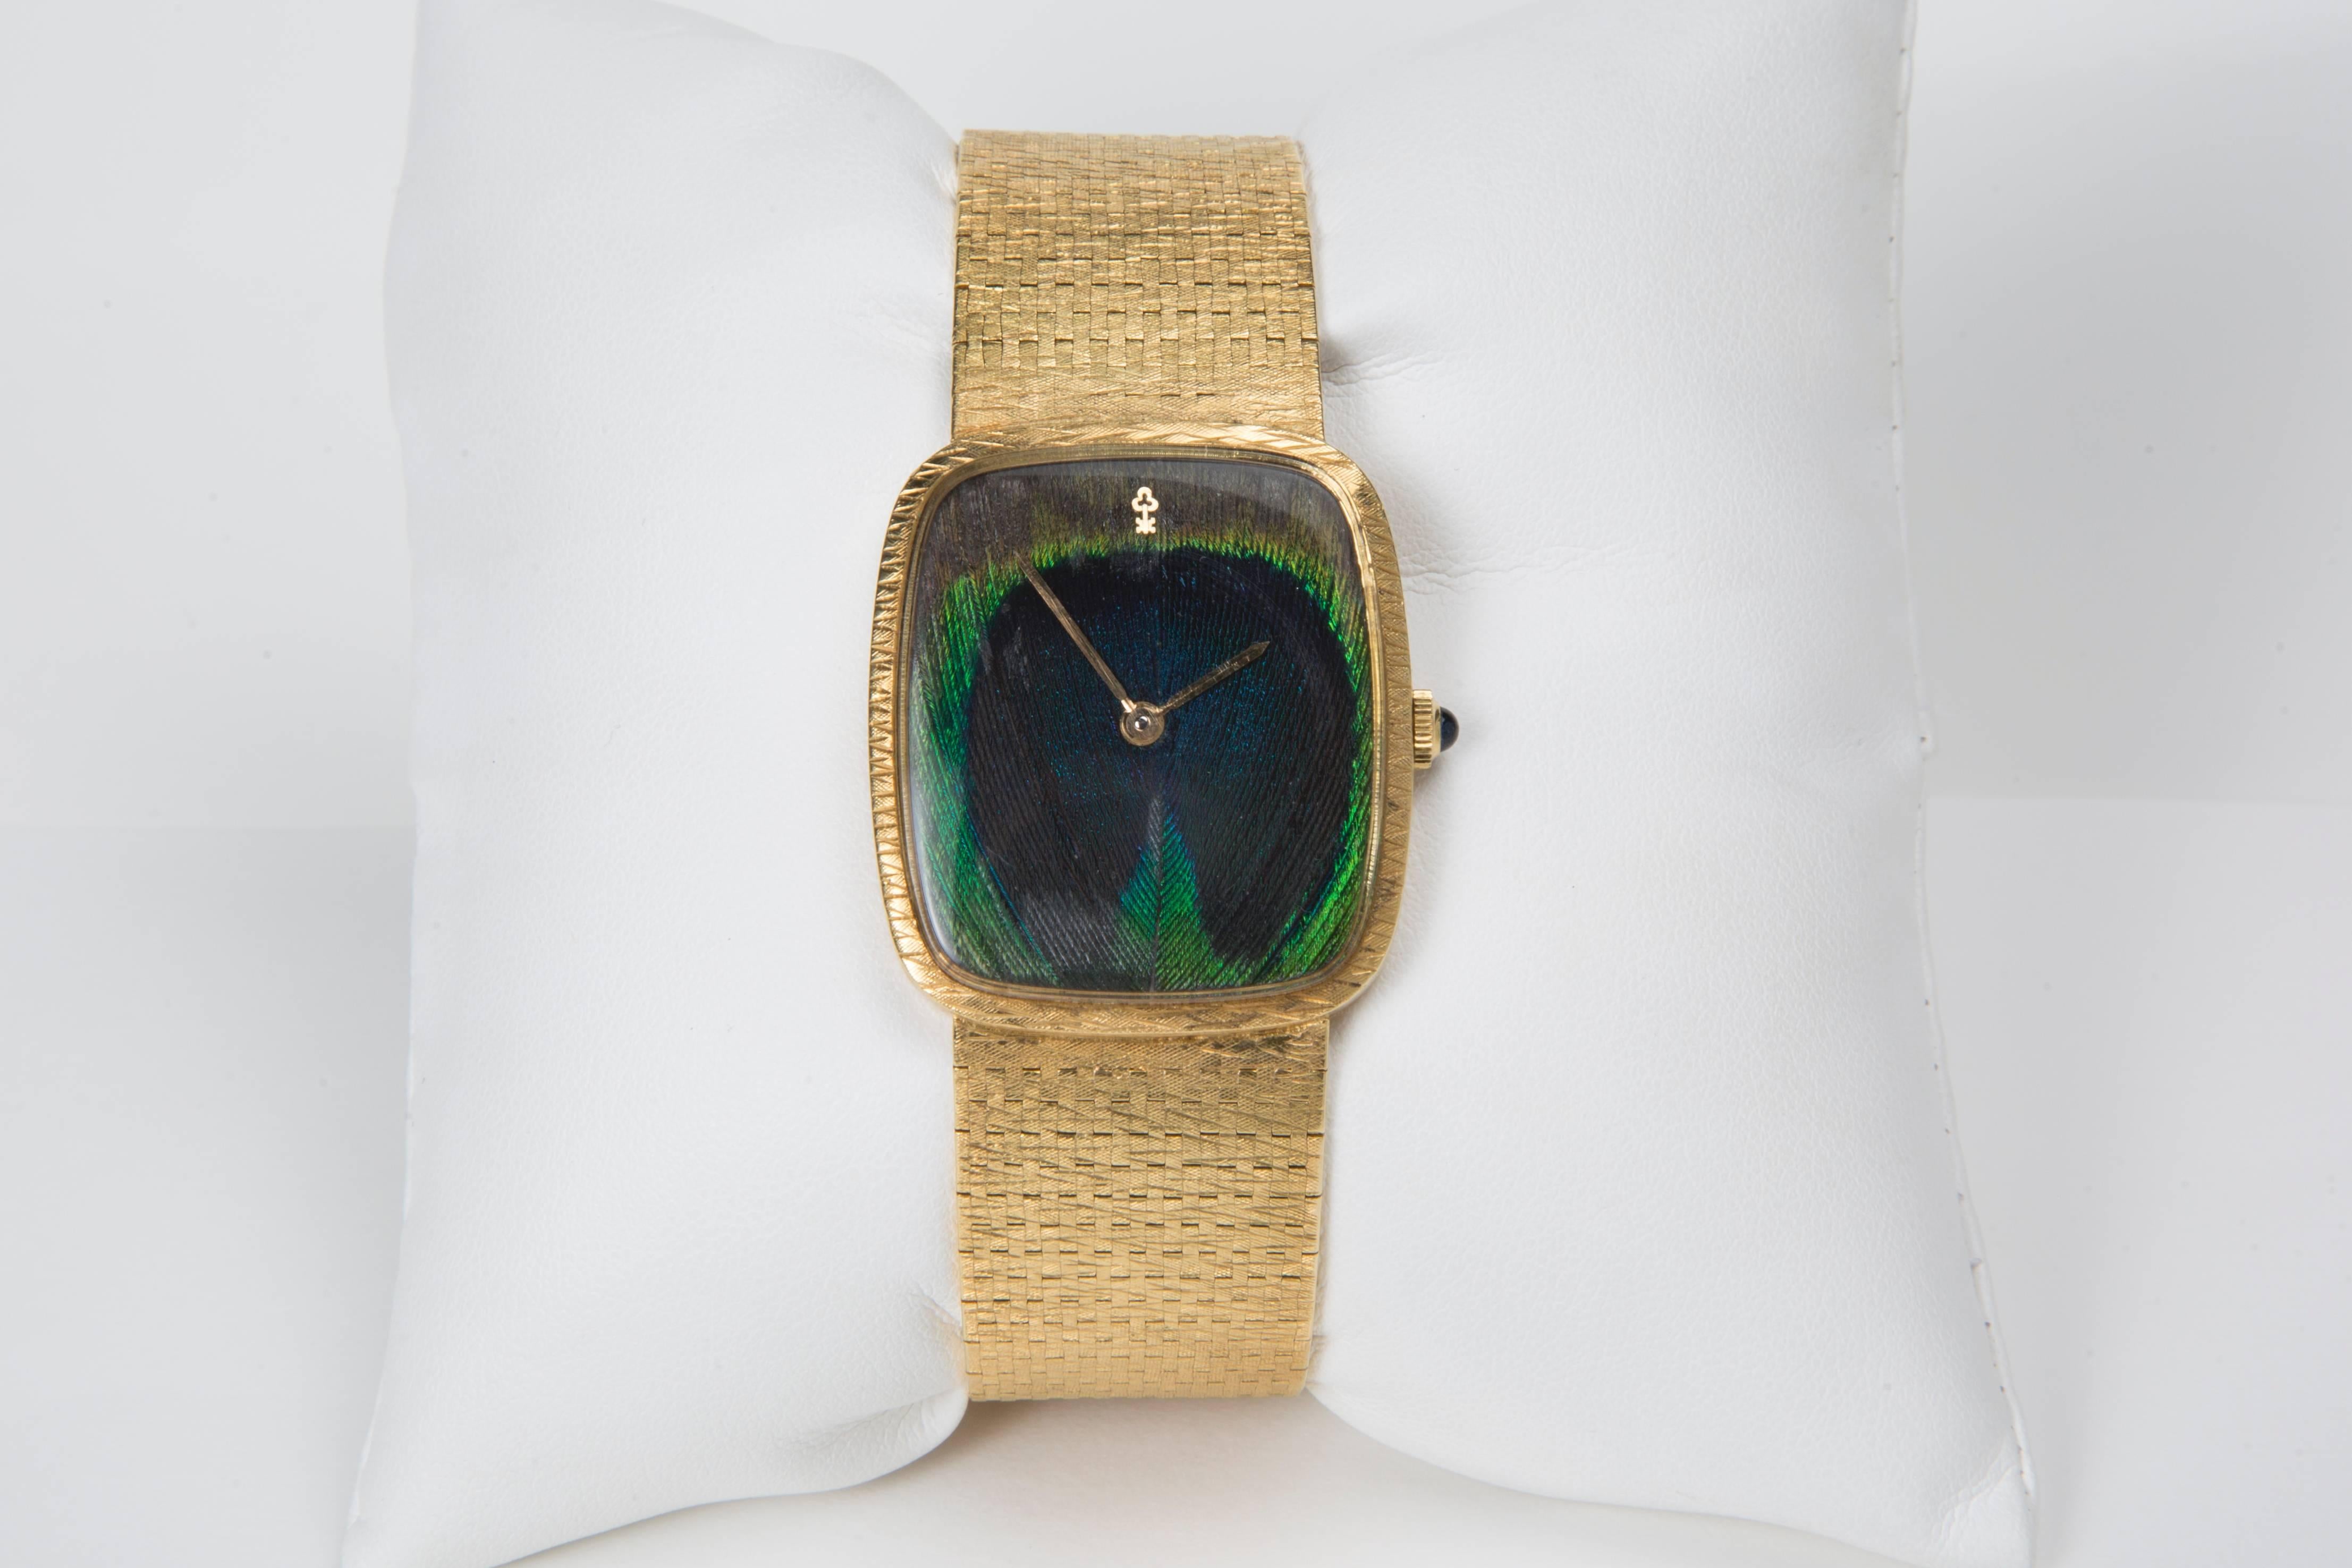 Corum Wristwatch
18K Yellow Gold and Peacock Feather Dial
Circa 1960